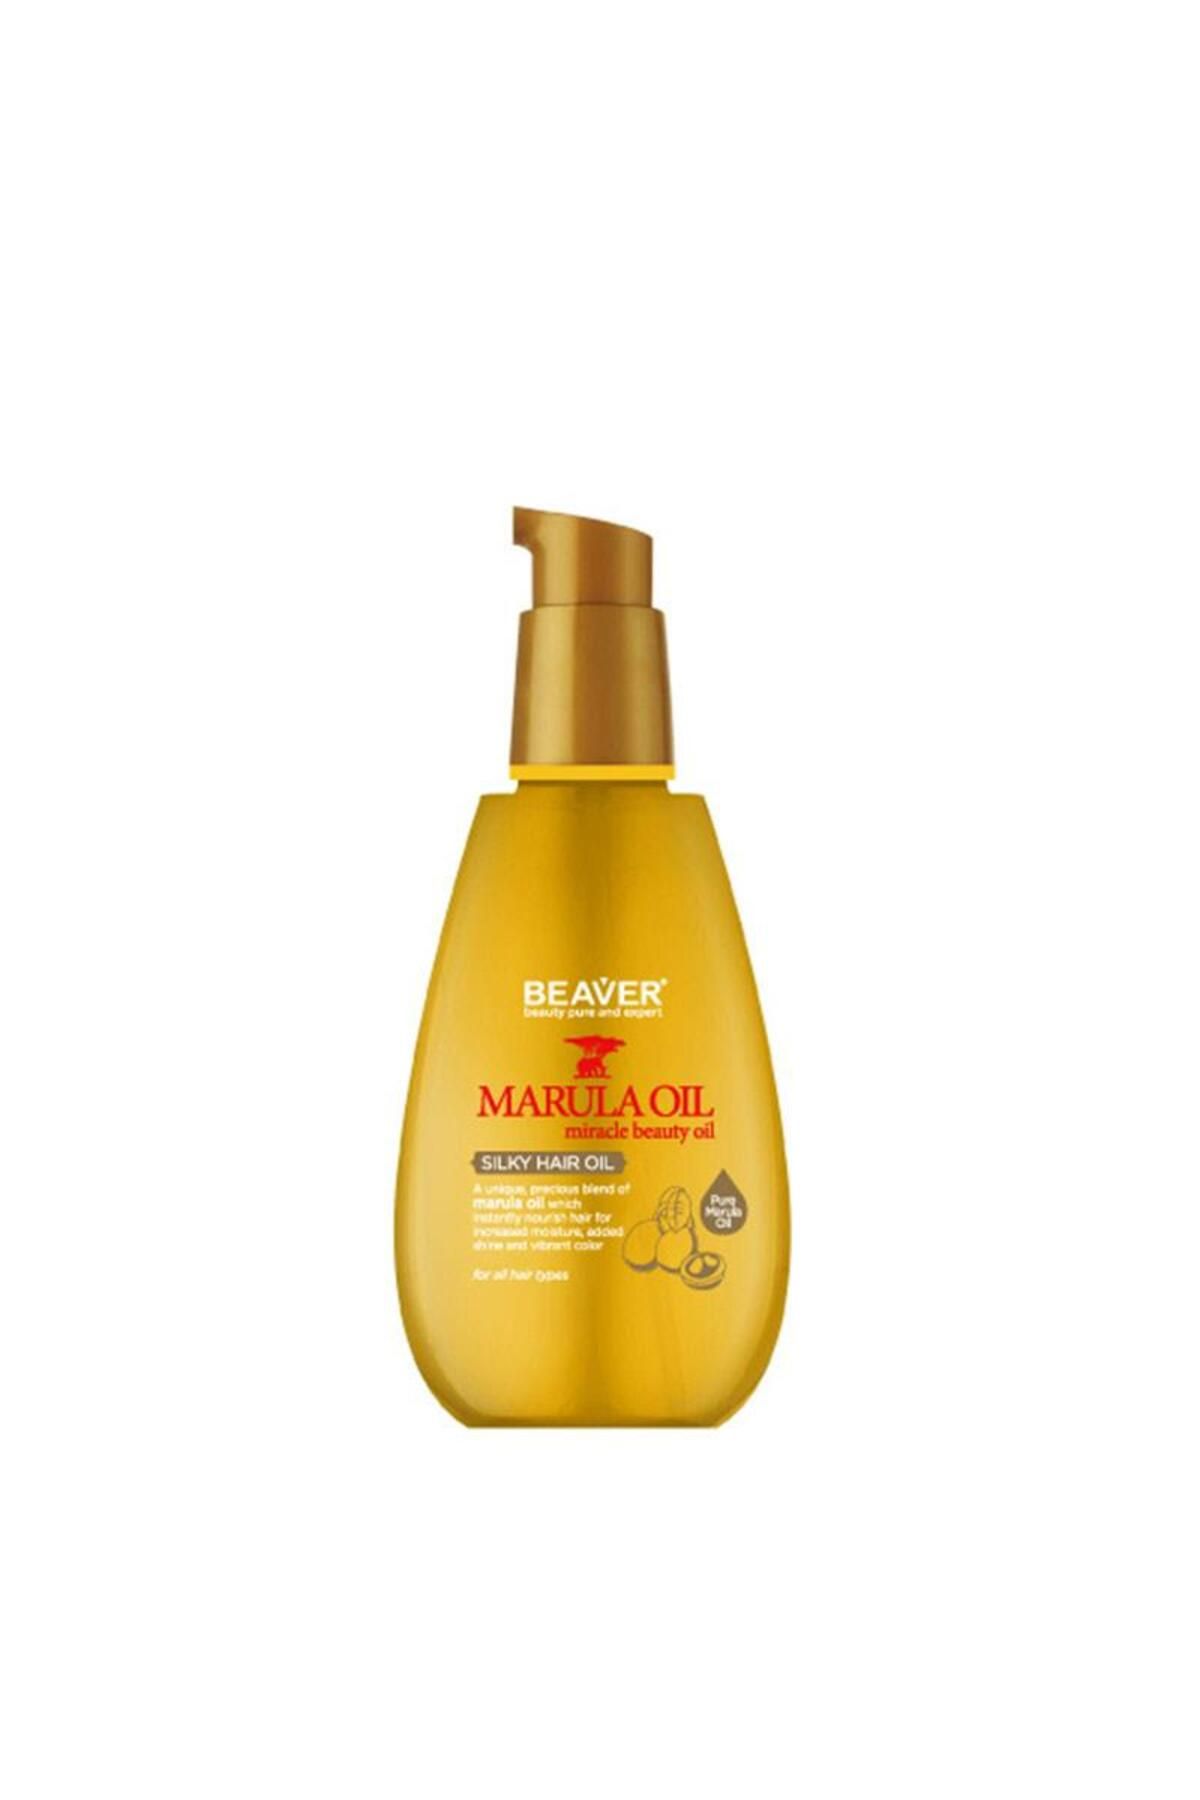 3M Beaver Marula Oil Silky Hair Oil Масло для ухода за волосами с маслом марулы 100 мл B-004